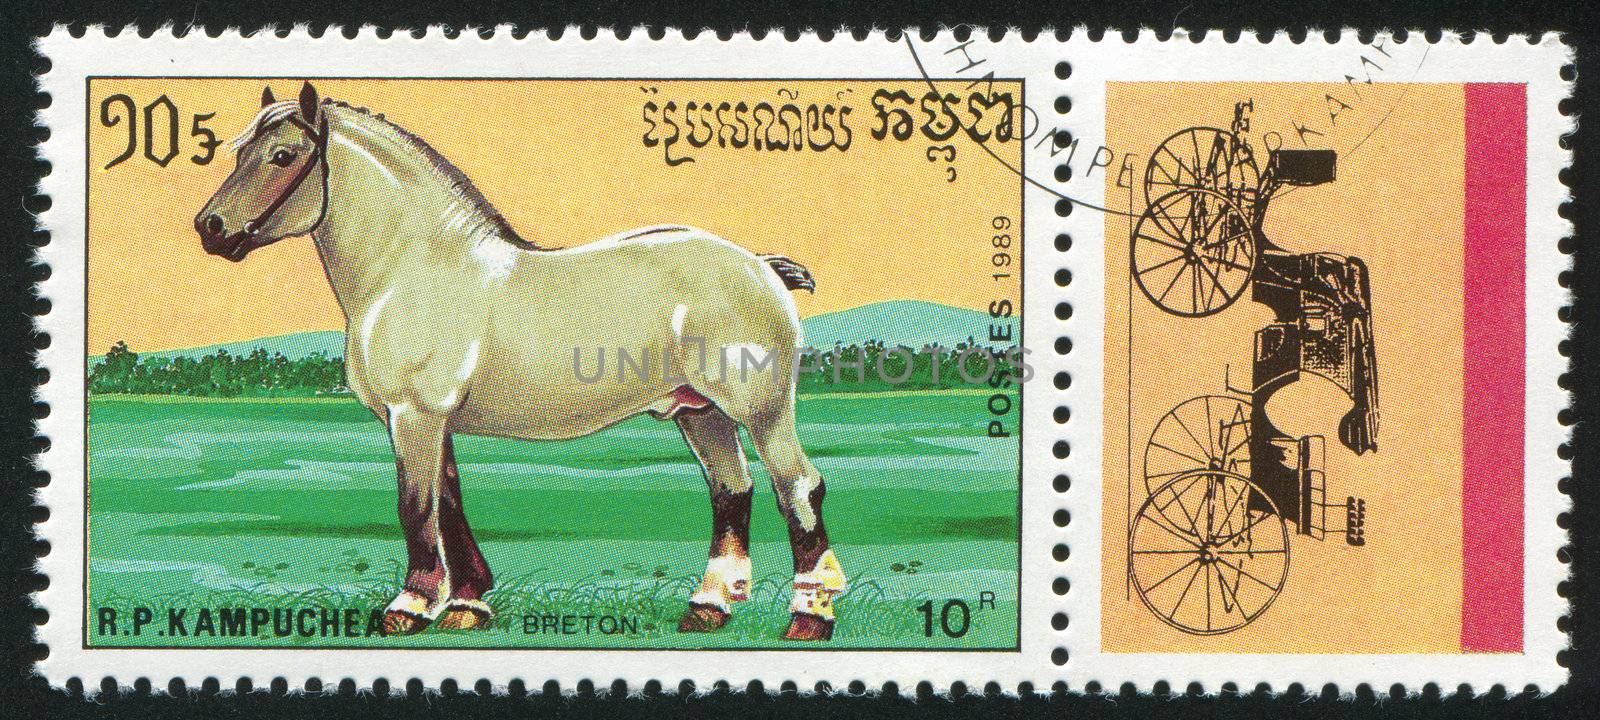 CAMBODIA - CIRCA 1989: stamp printed by Cambodia, shows horse, circa 1989.